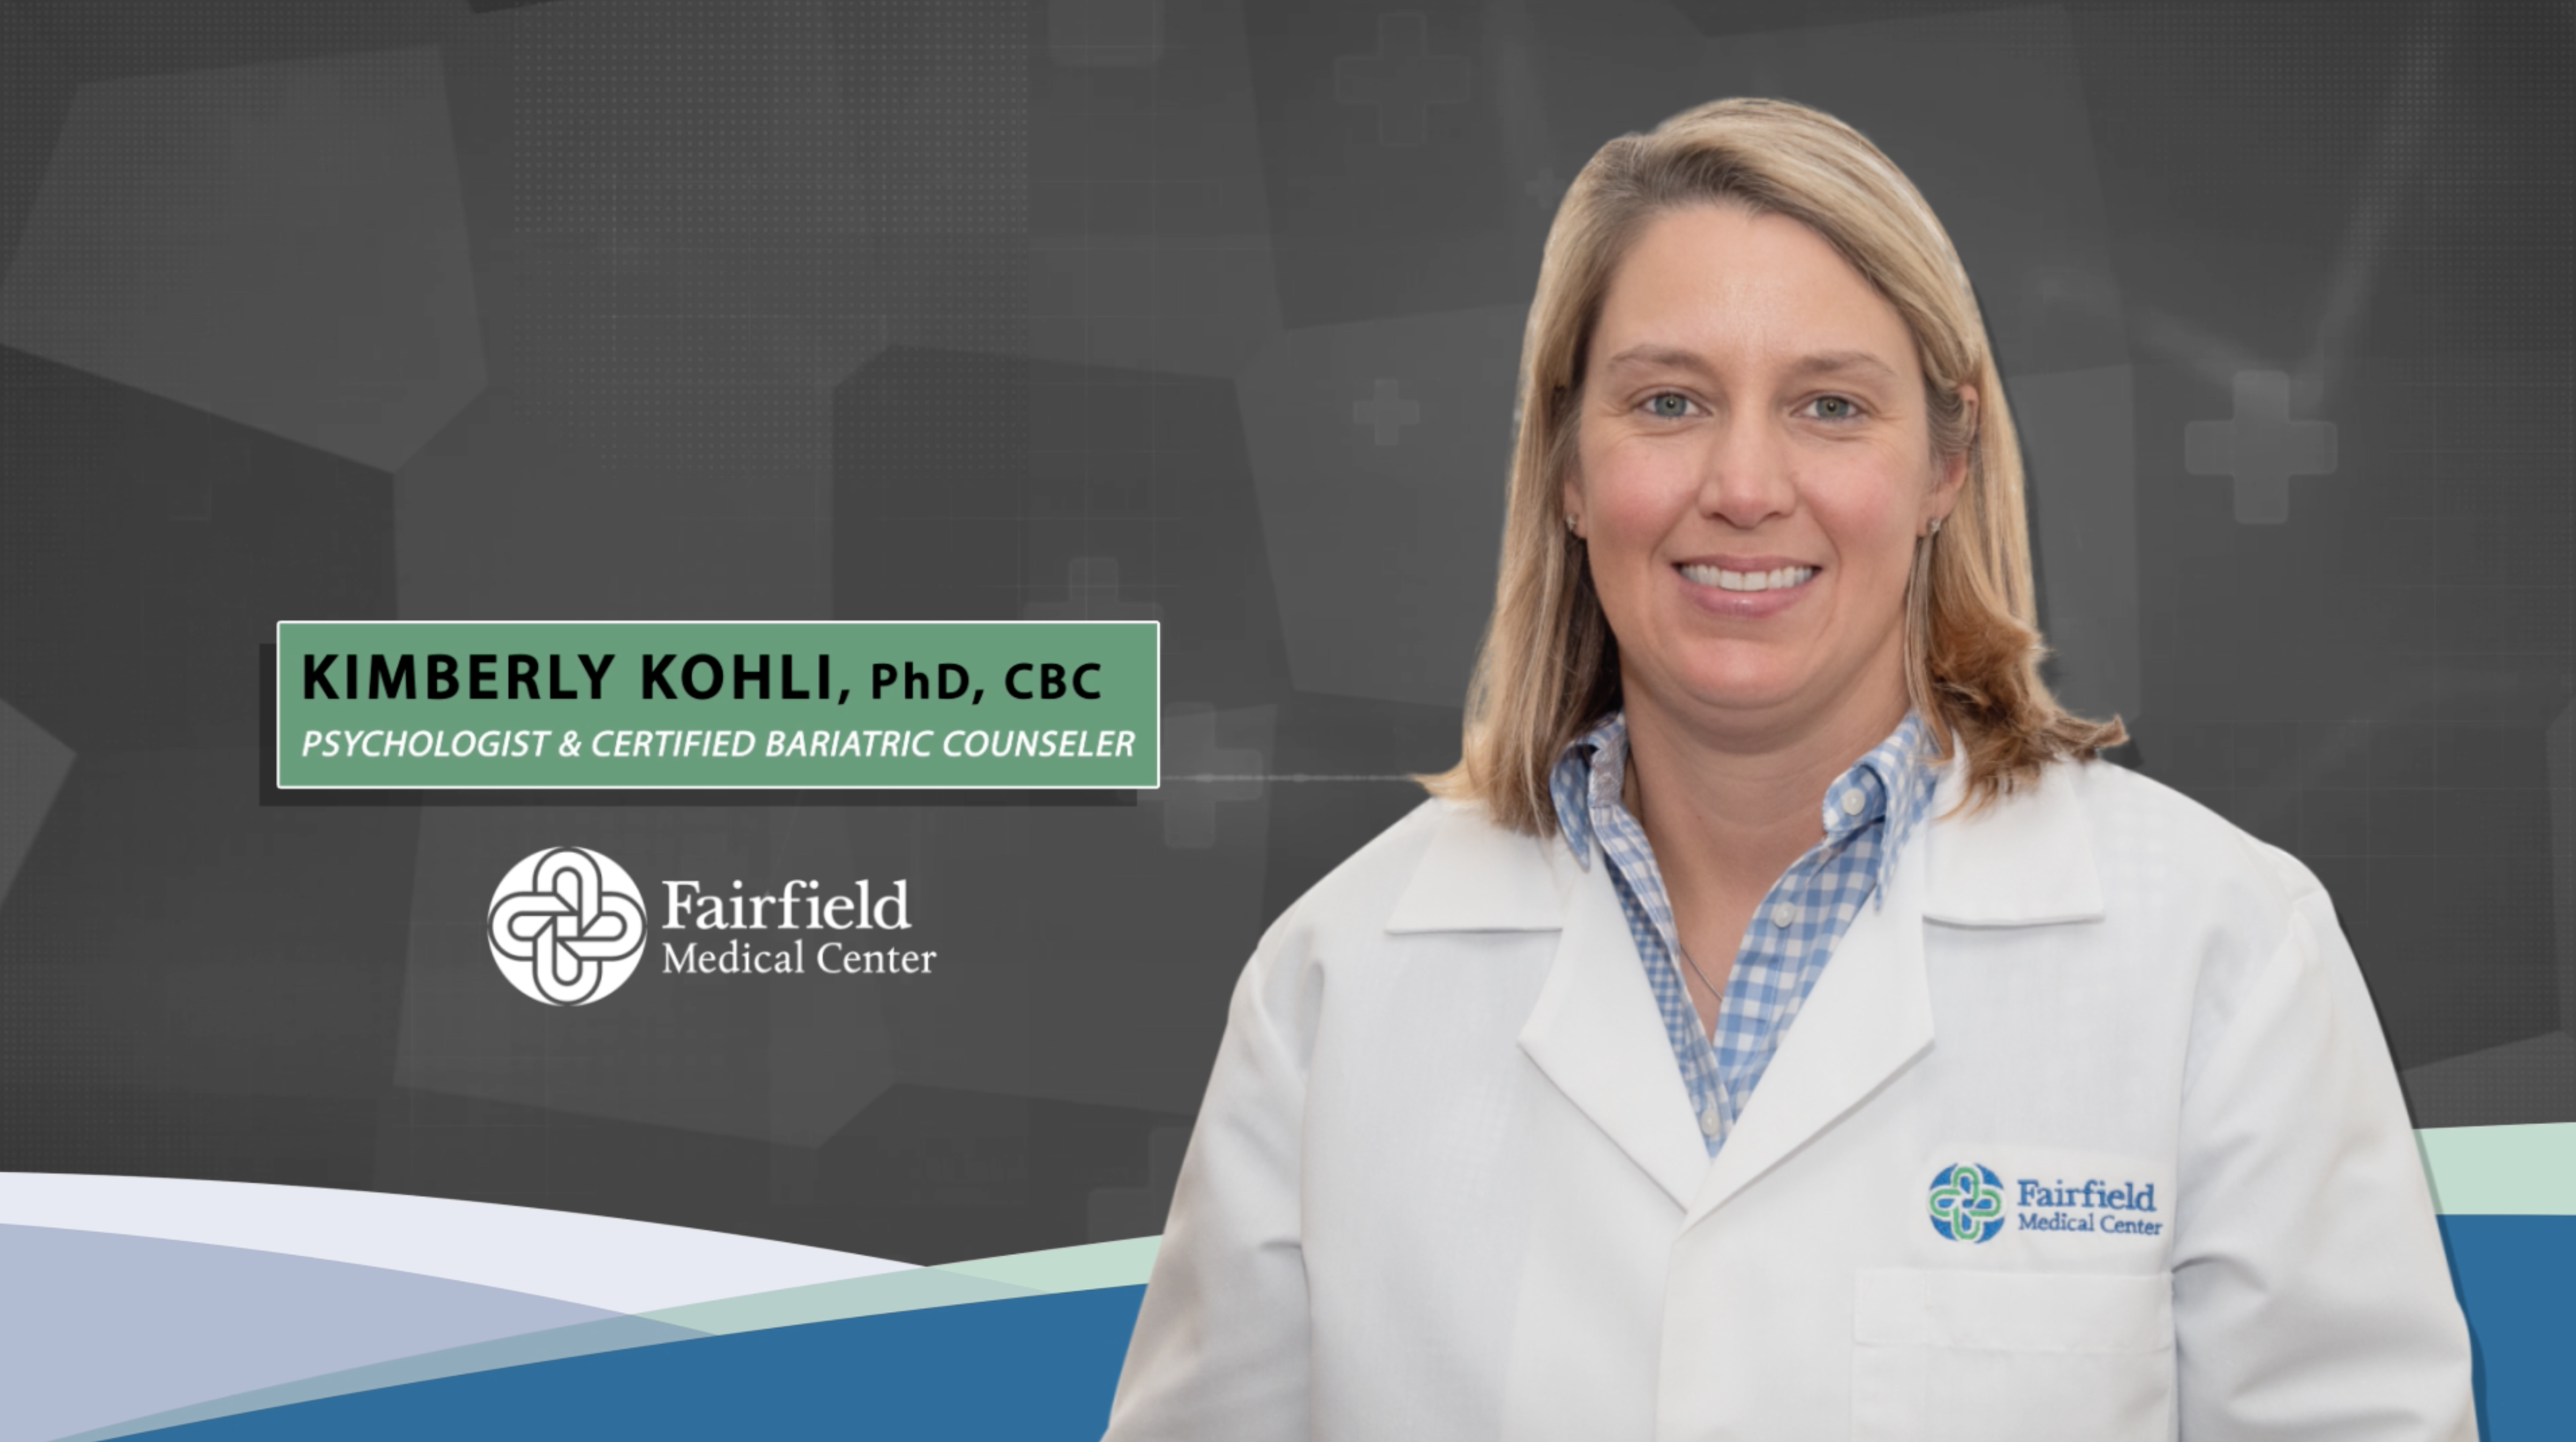 Experience Individualized Care with Kimberly Kohli, PhD